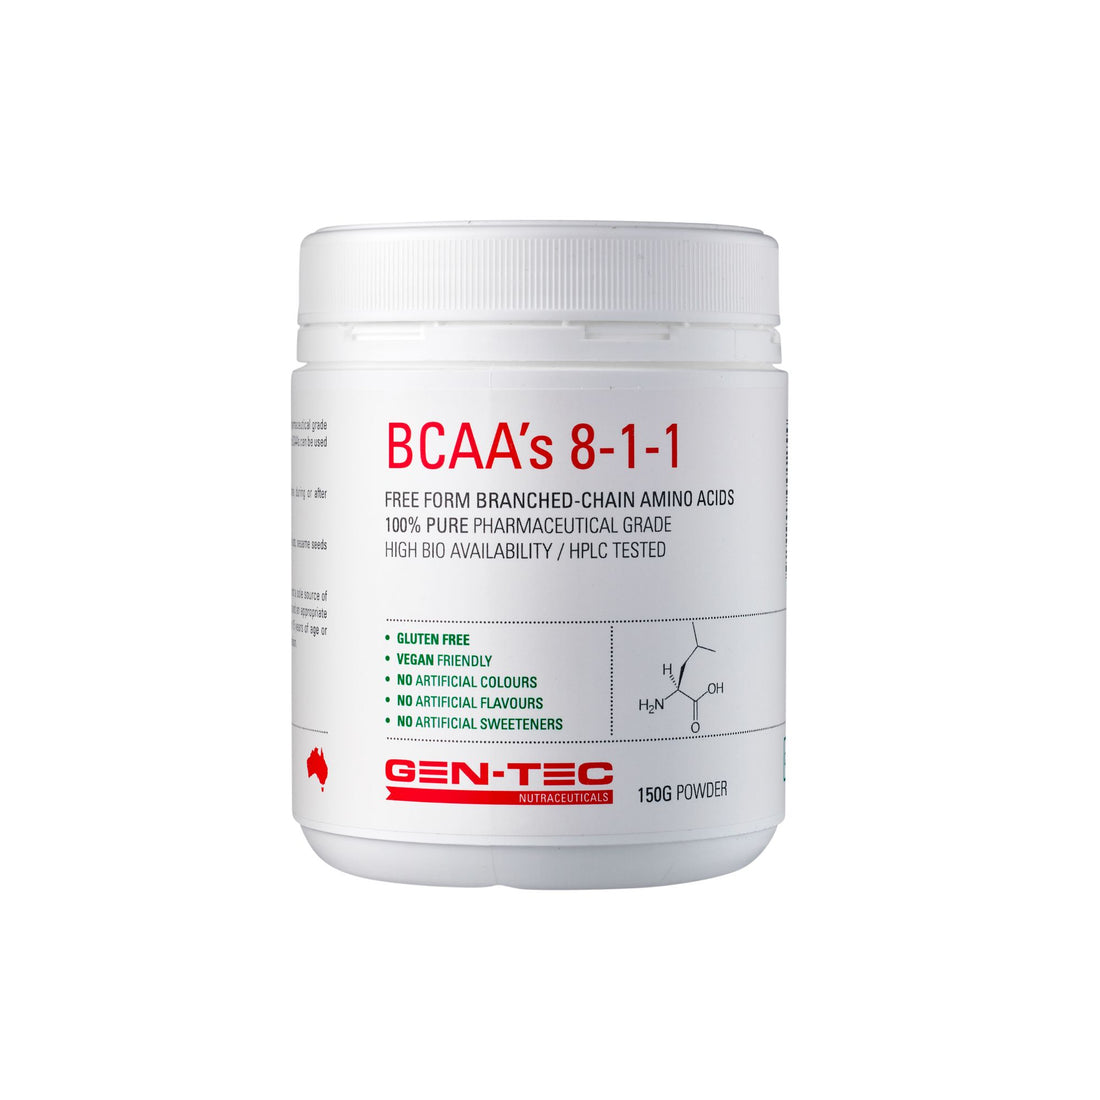 Gentec BCAAs 8-1-1 Nutraceuticals